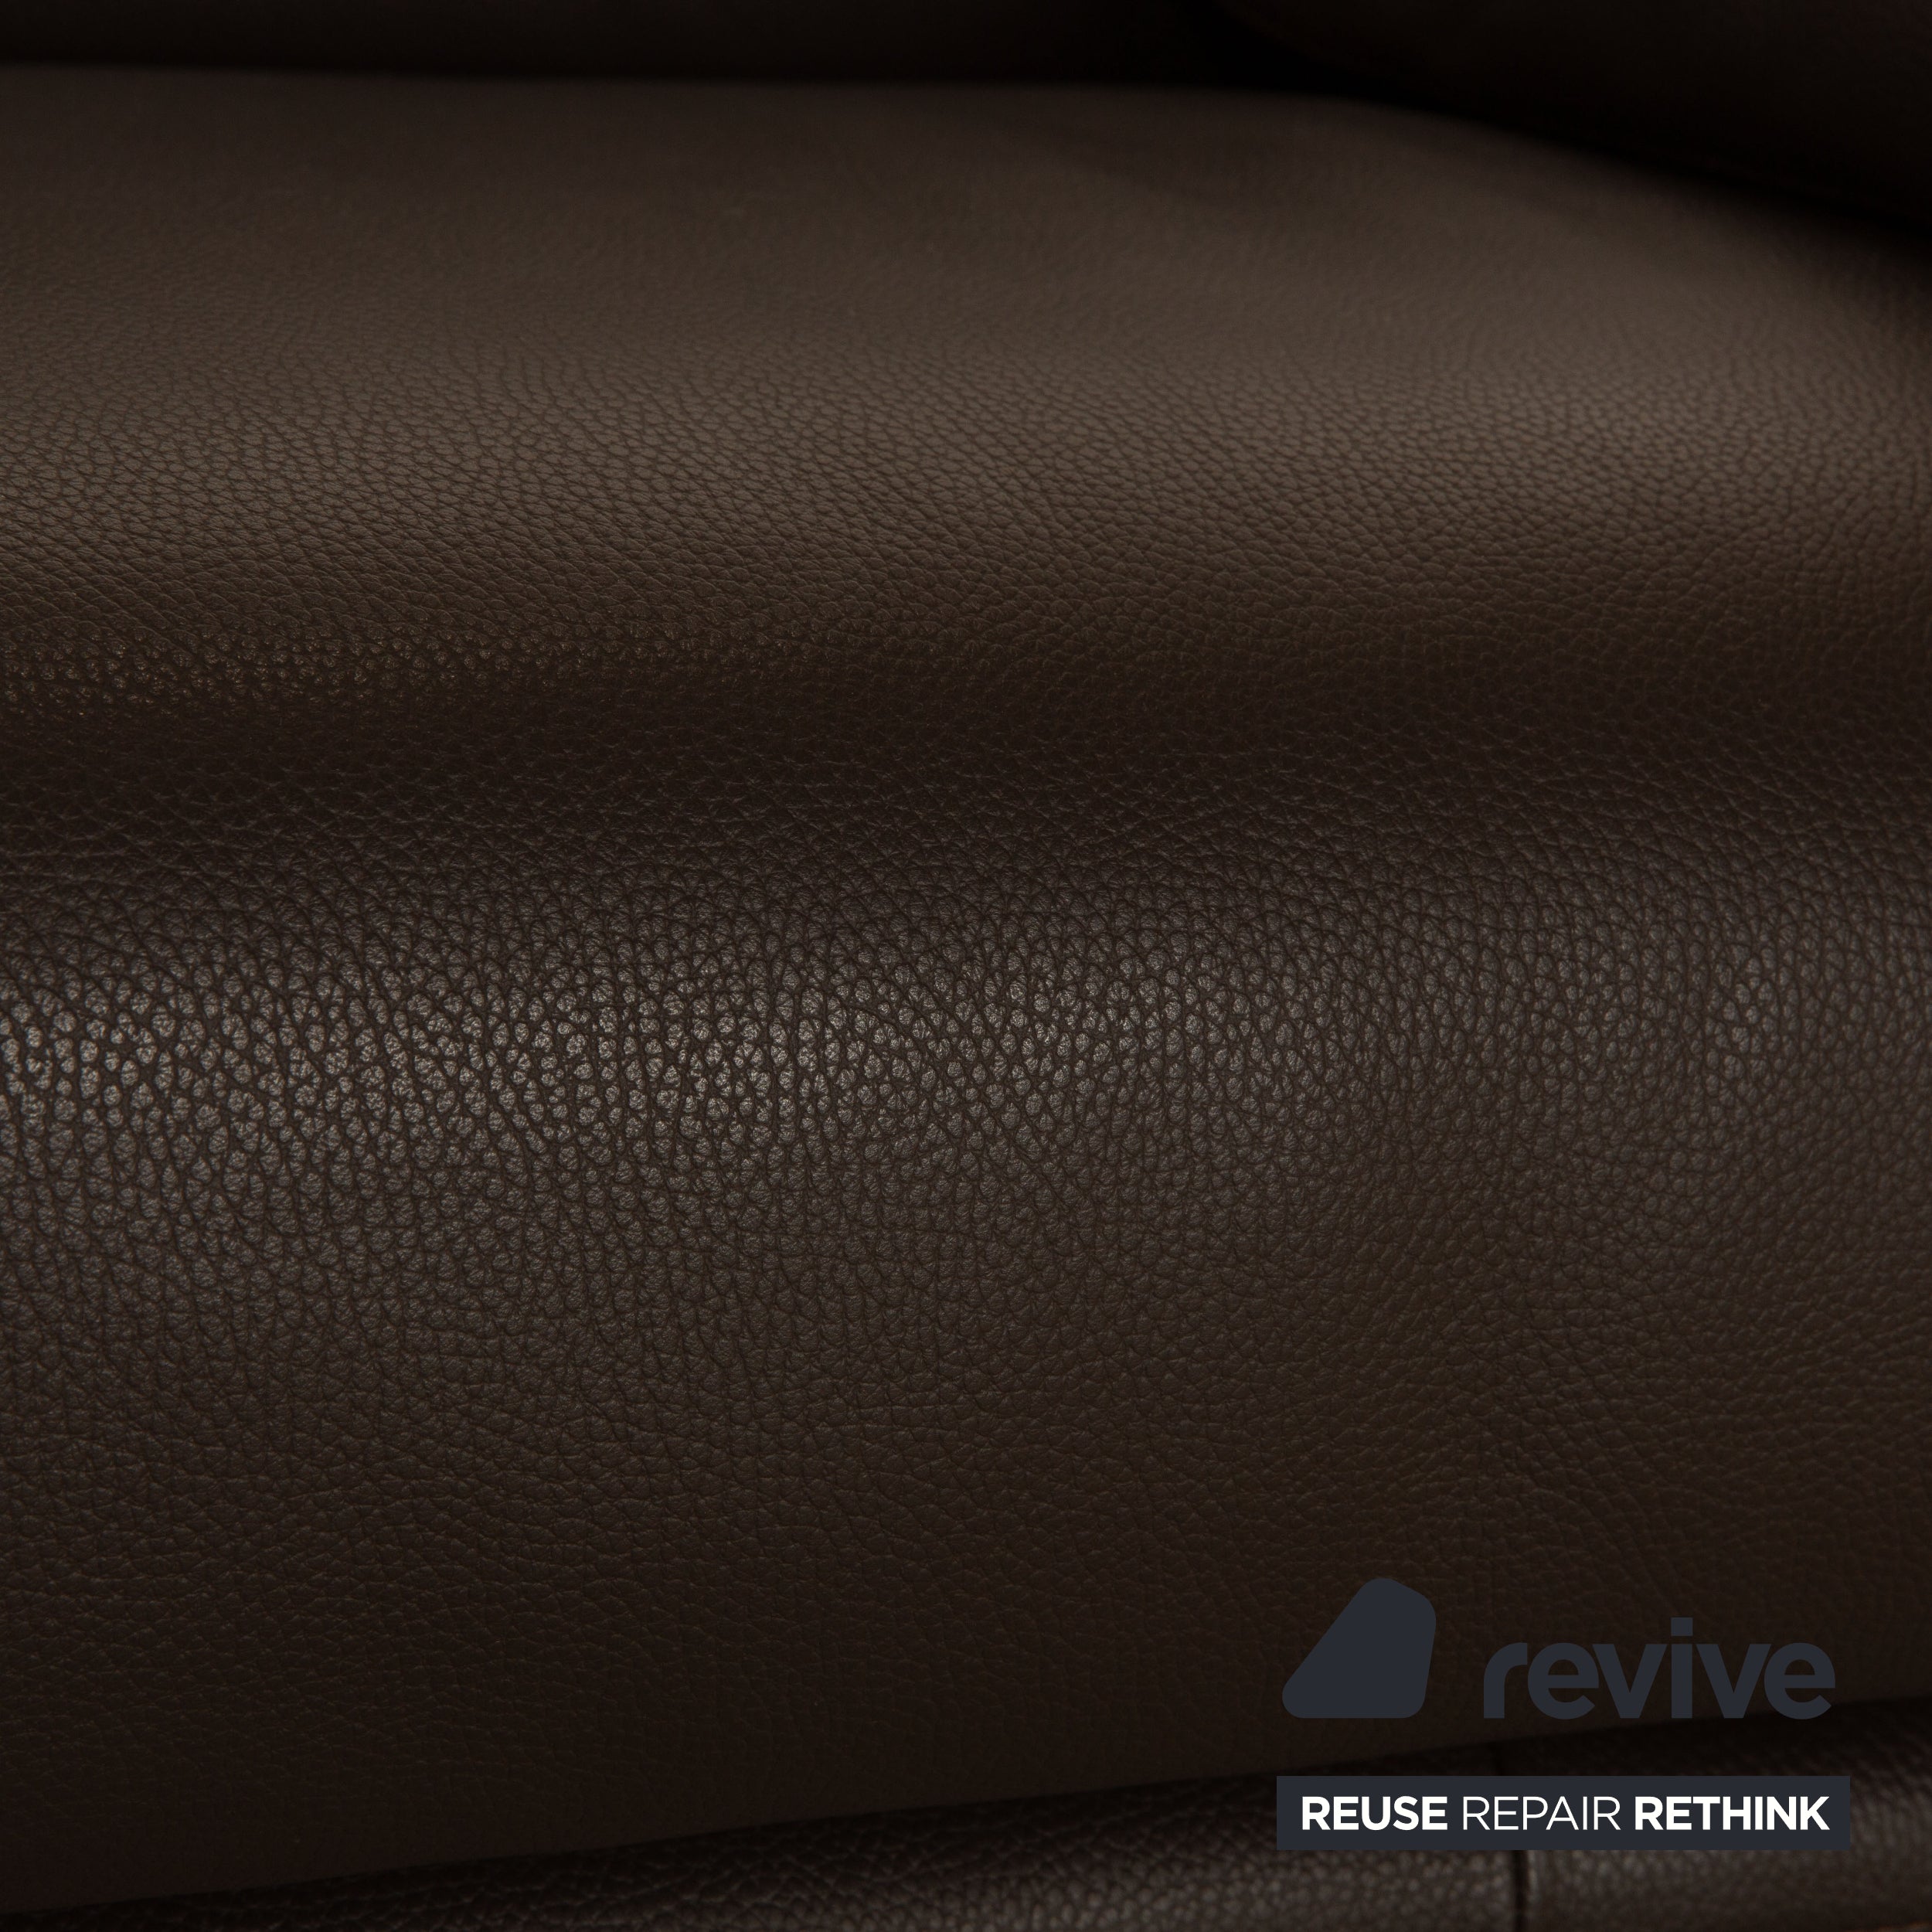 Leolux Bora Balanza Leather Two Seater Brown Dark Brown Sofa Couch